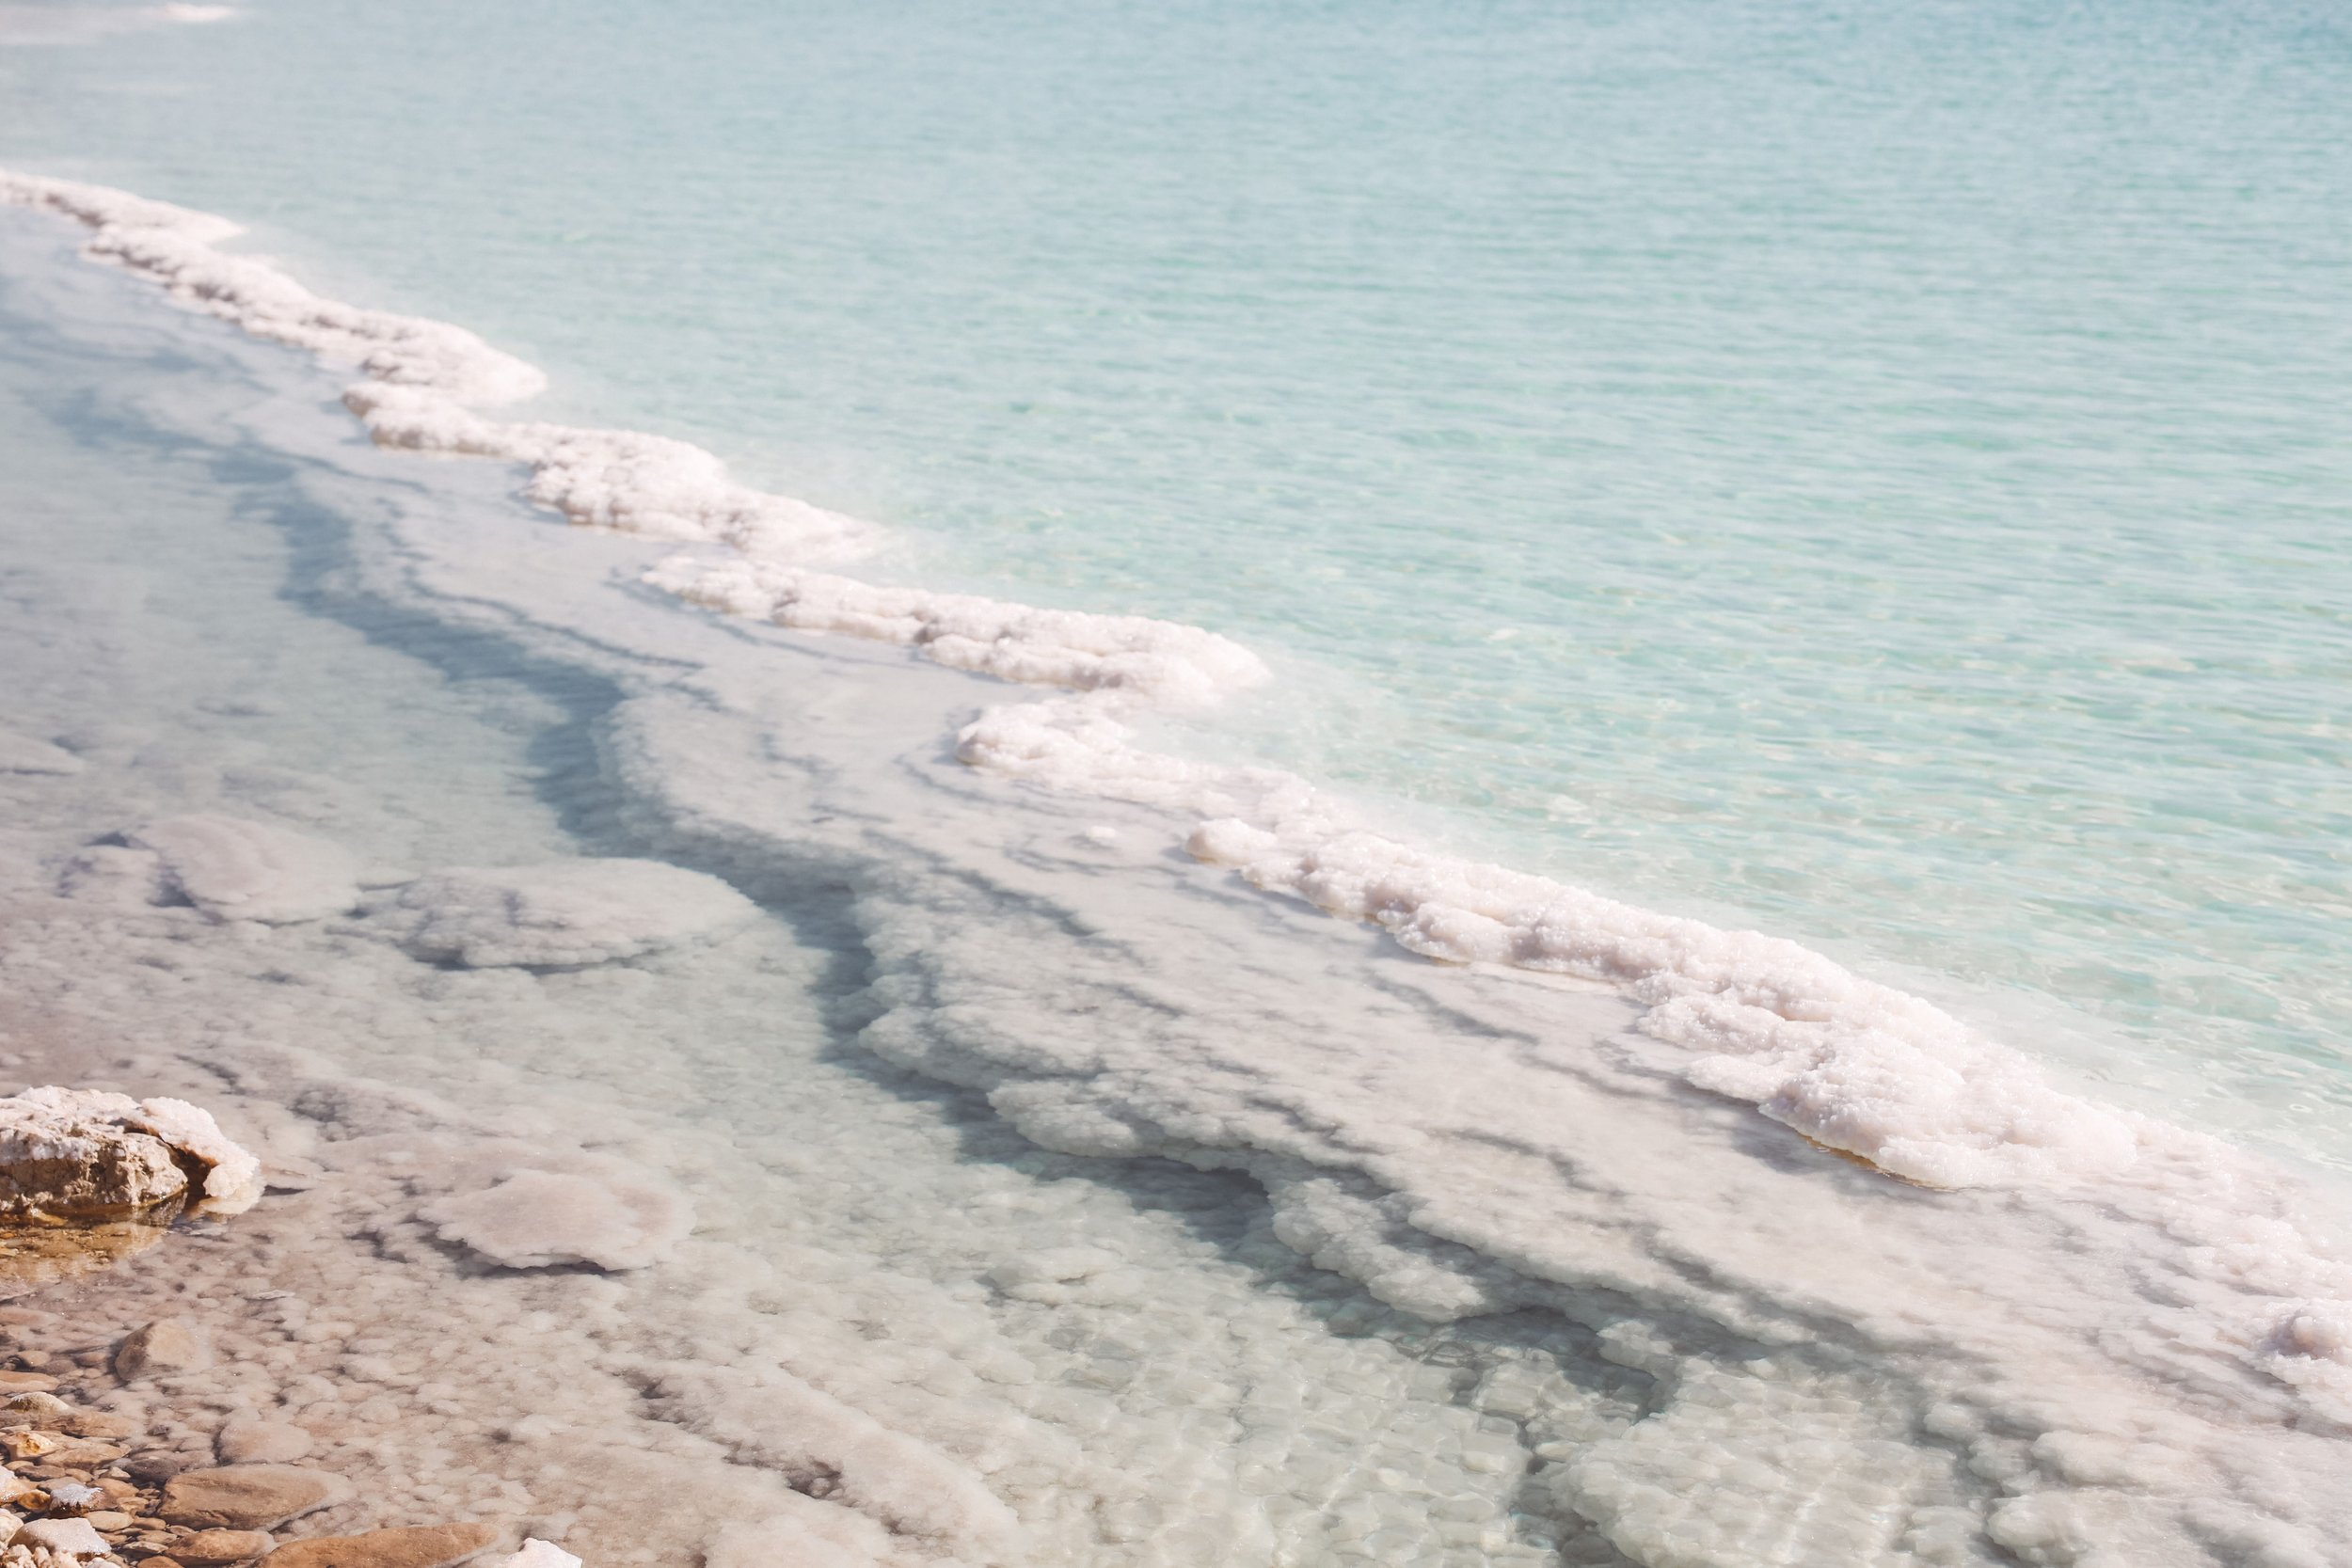 La côte de sel - La mer morte - Ein Bobek - Israël